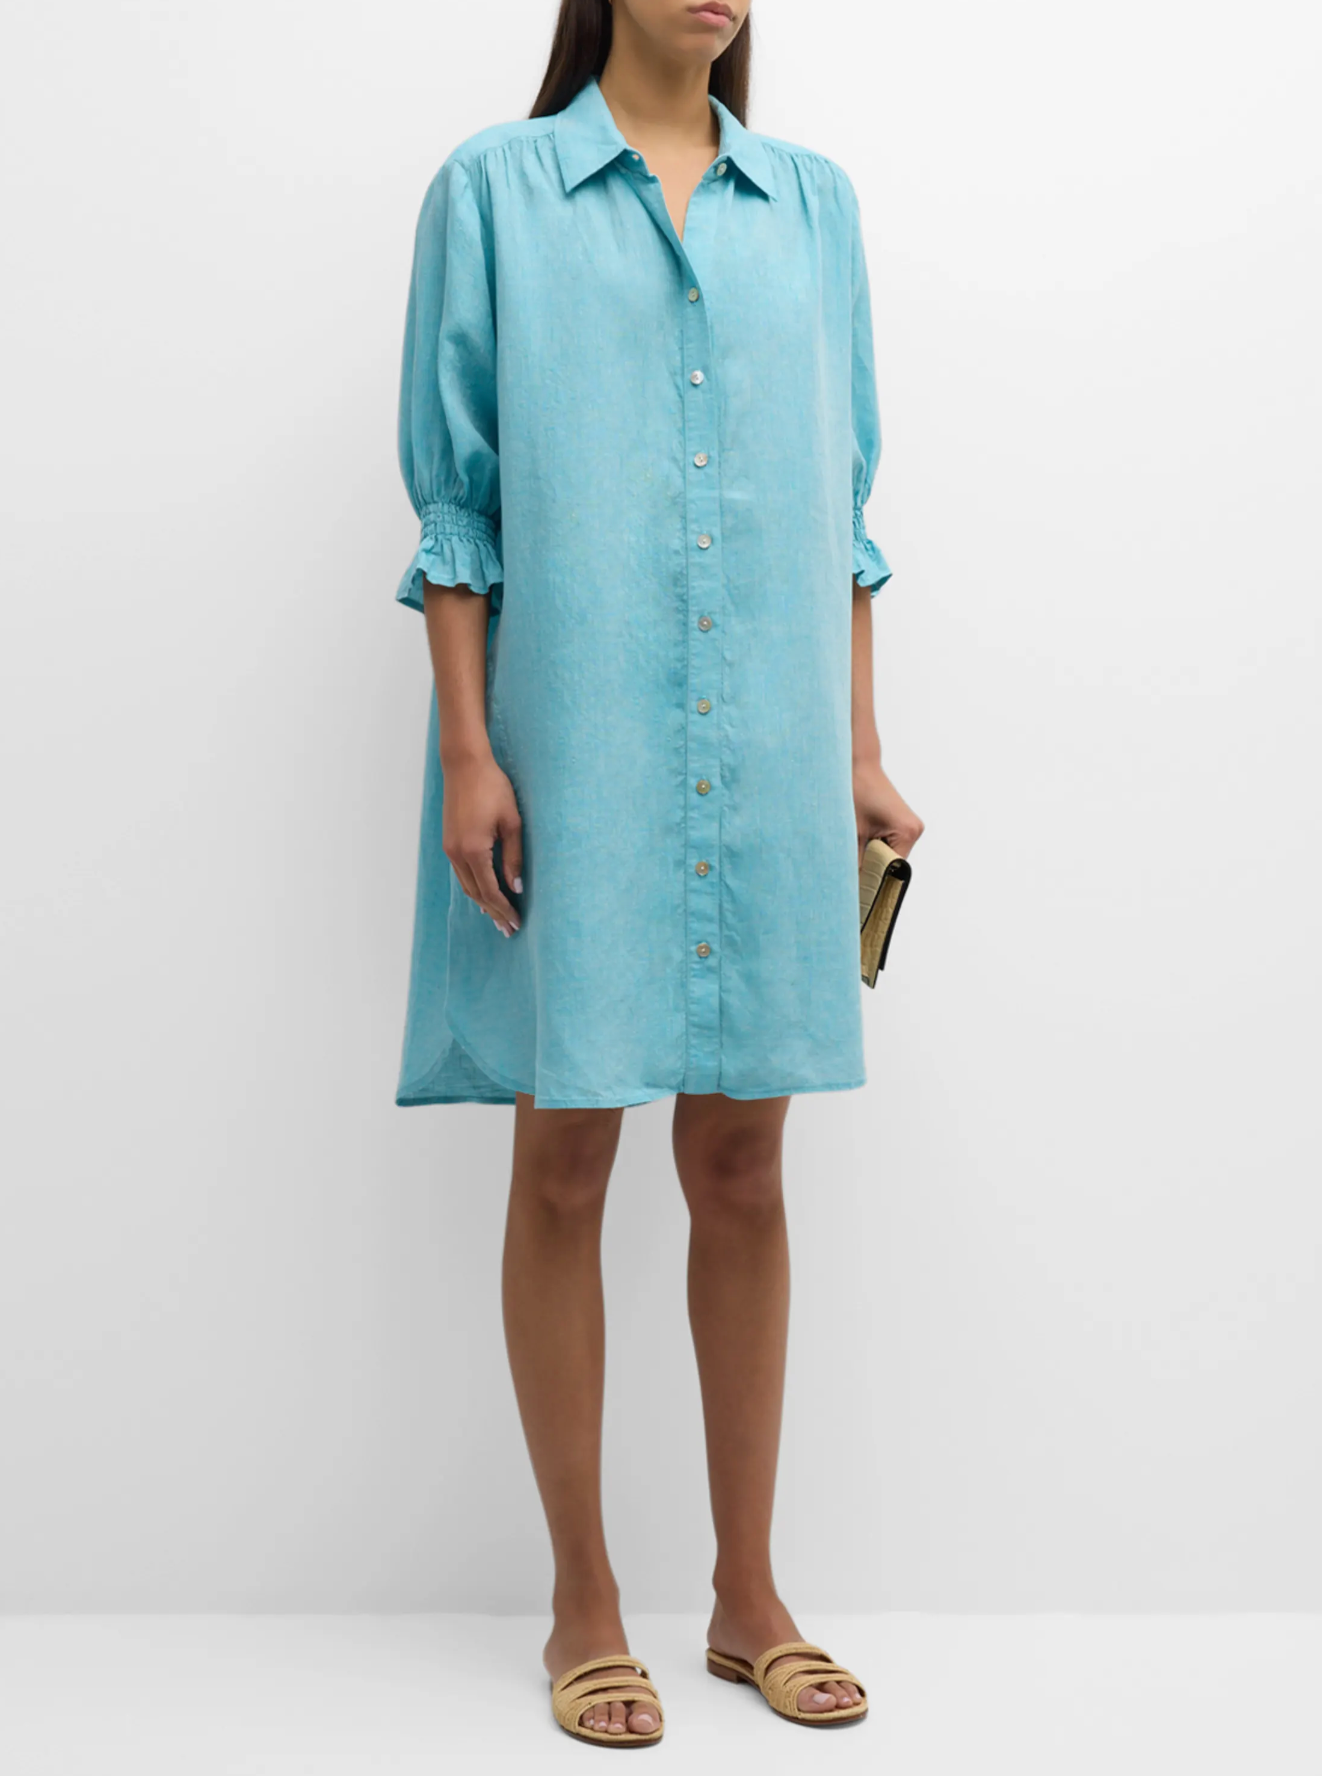 Miller Dress in Caribbean Blue Linen - The French Shoppe